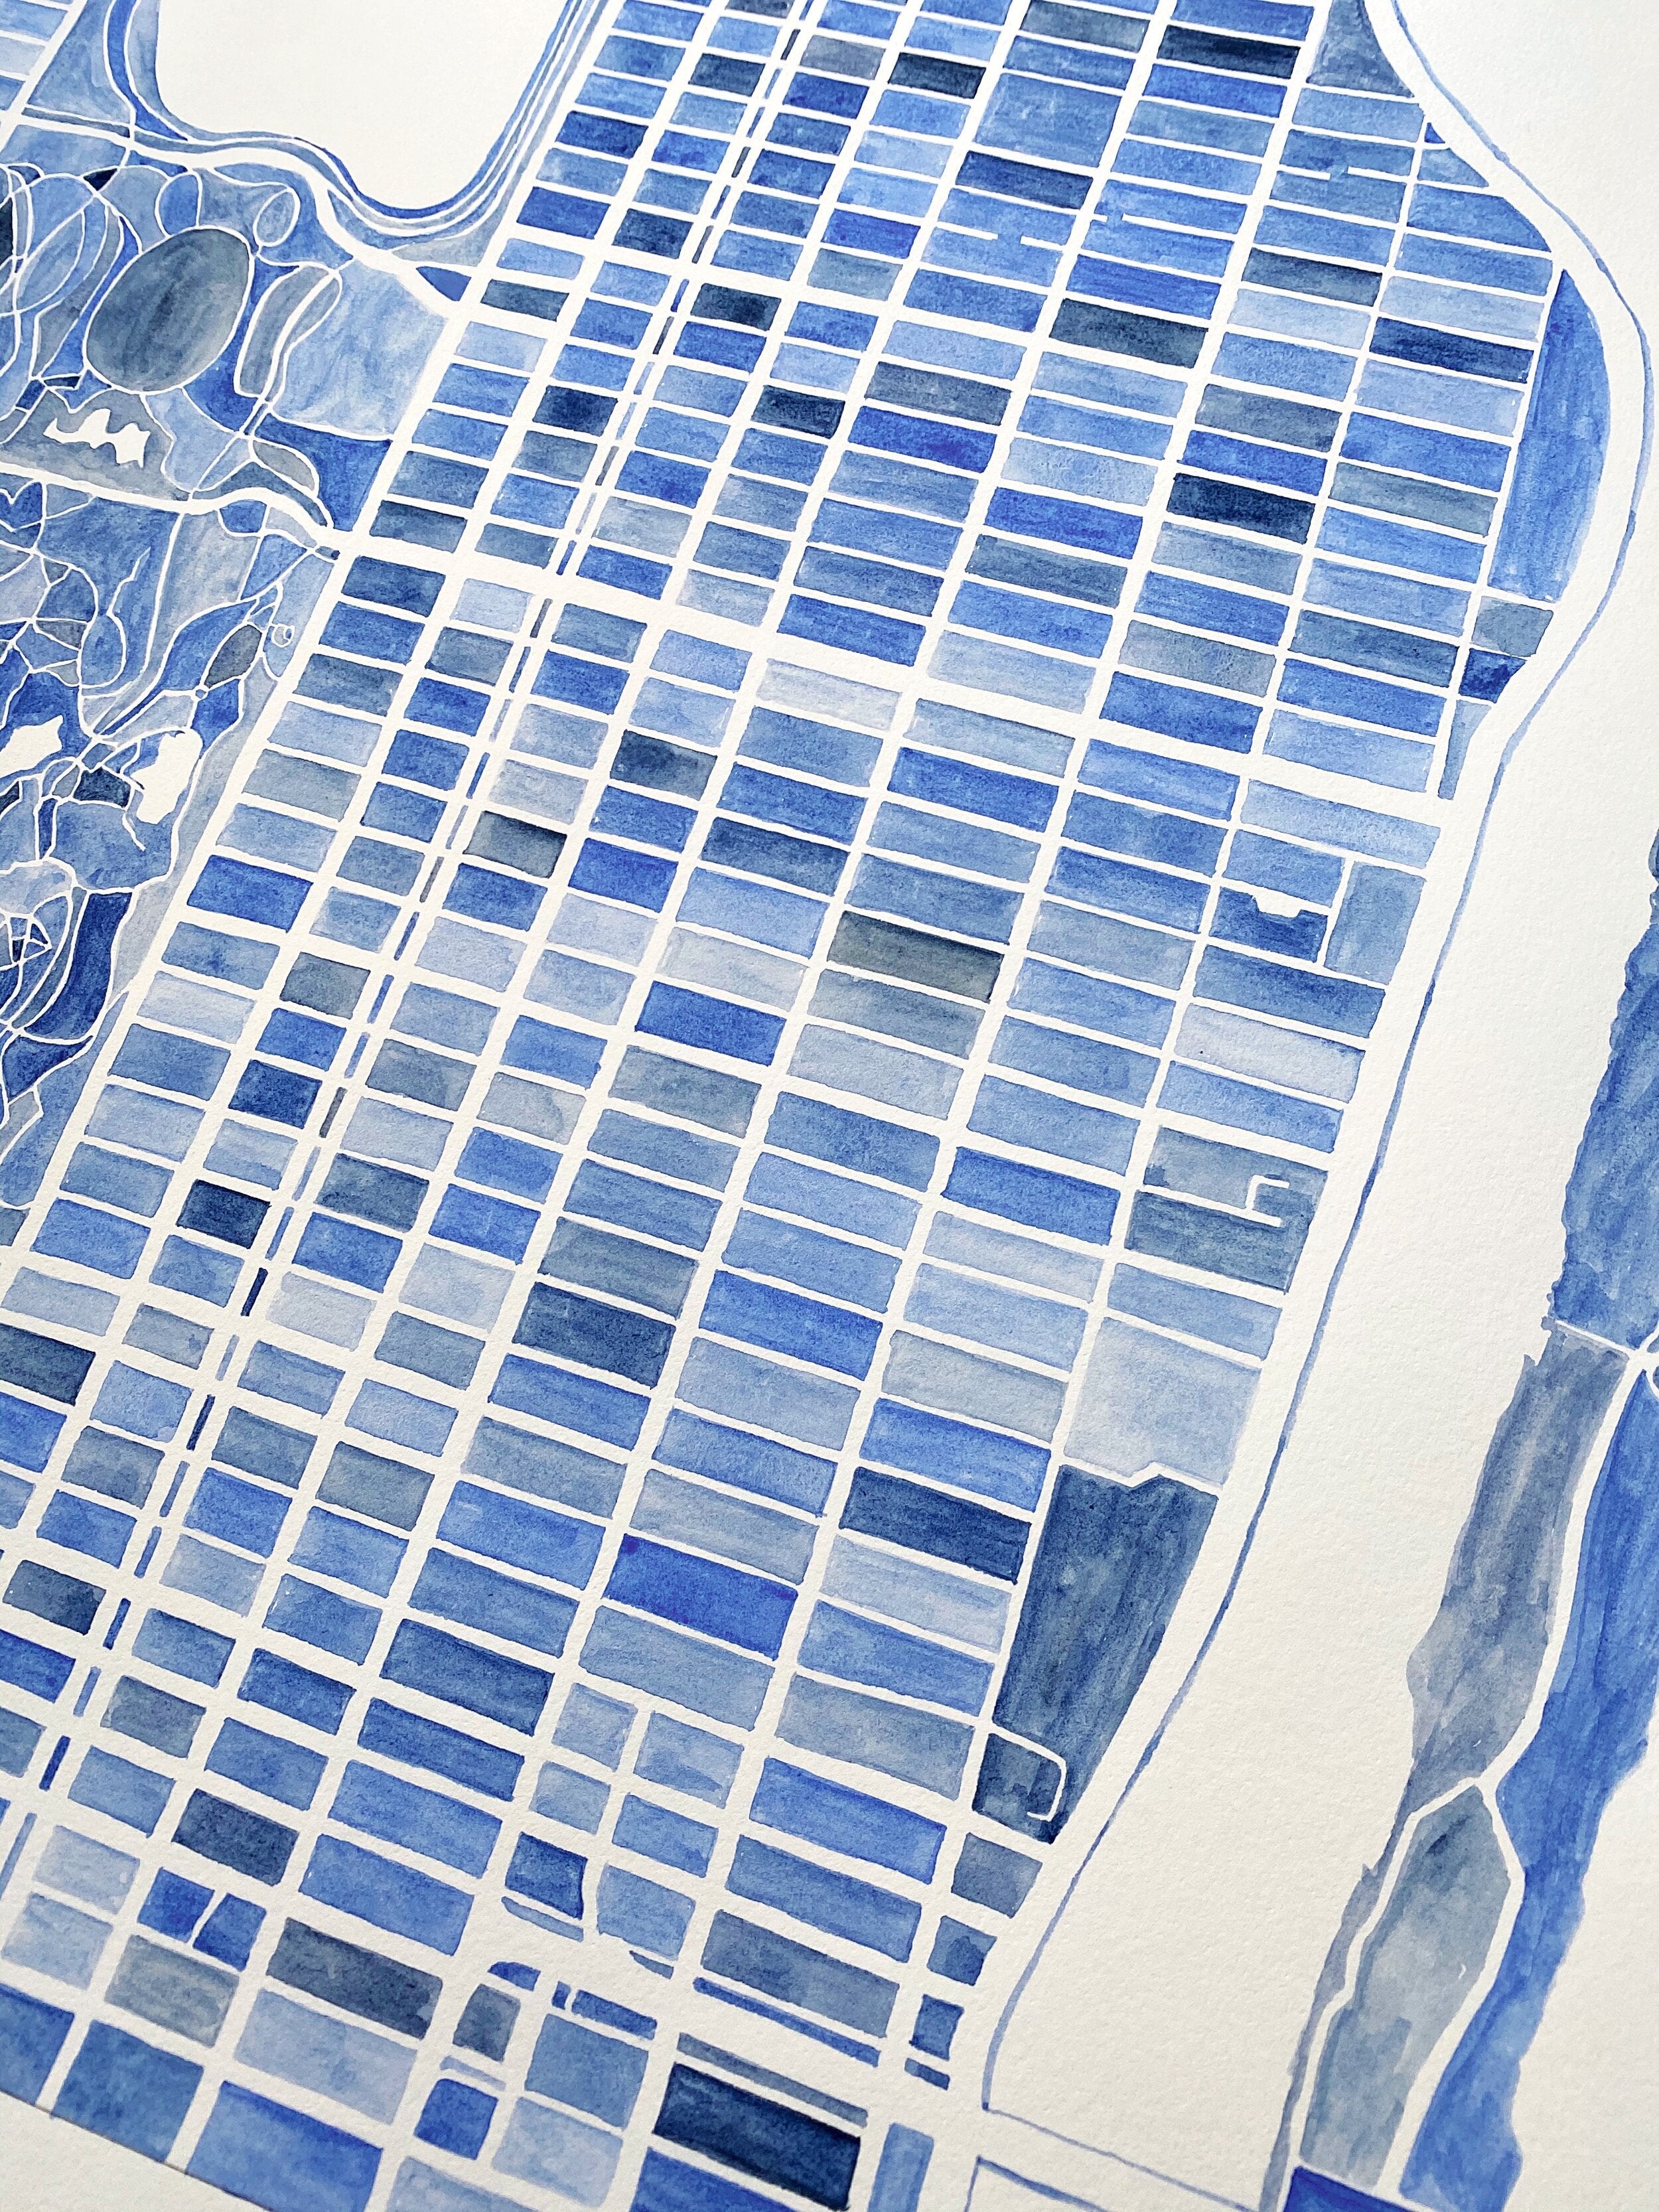 Upper East Side MANHATTAN Watercolor City Blocks Map: ORIGINAL PAINTING (Commission)